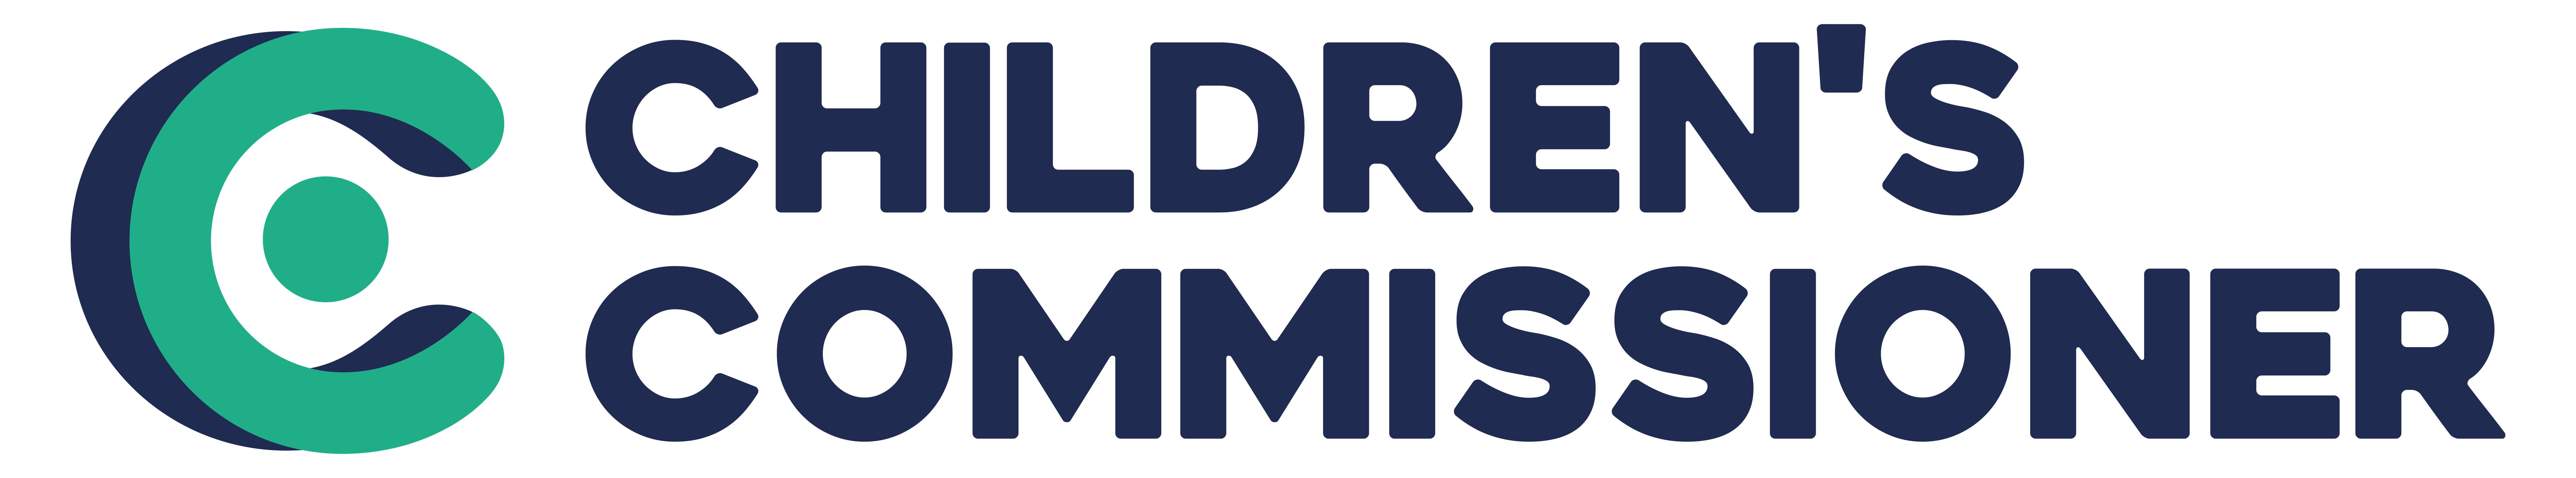 Children's Commissioner logo.